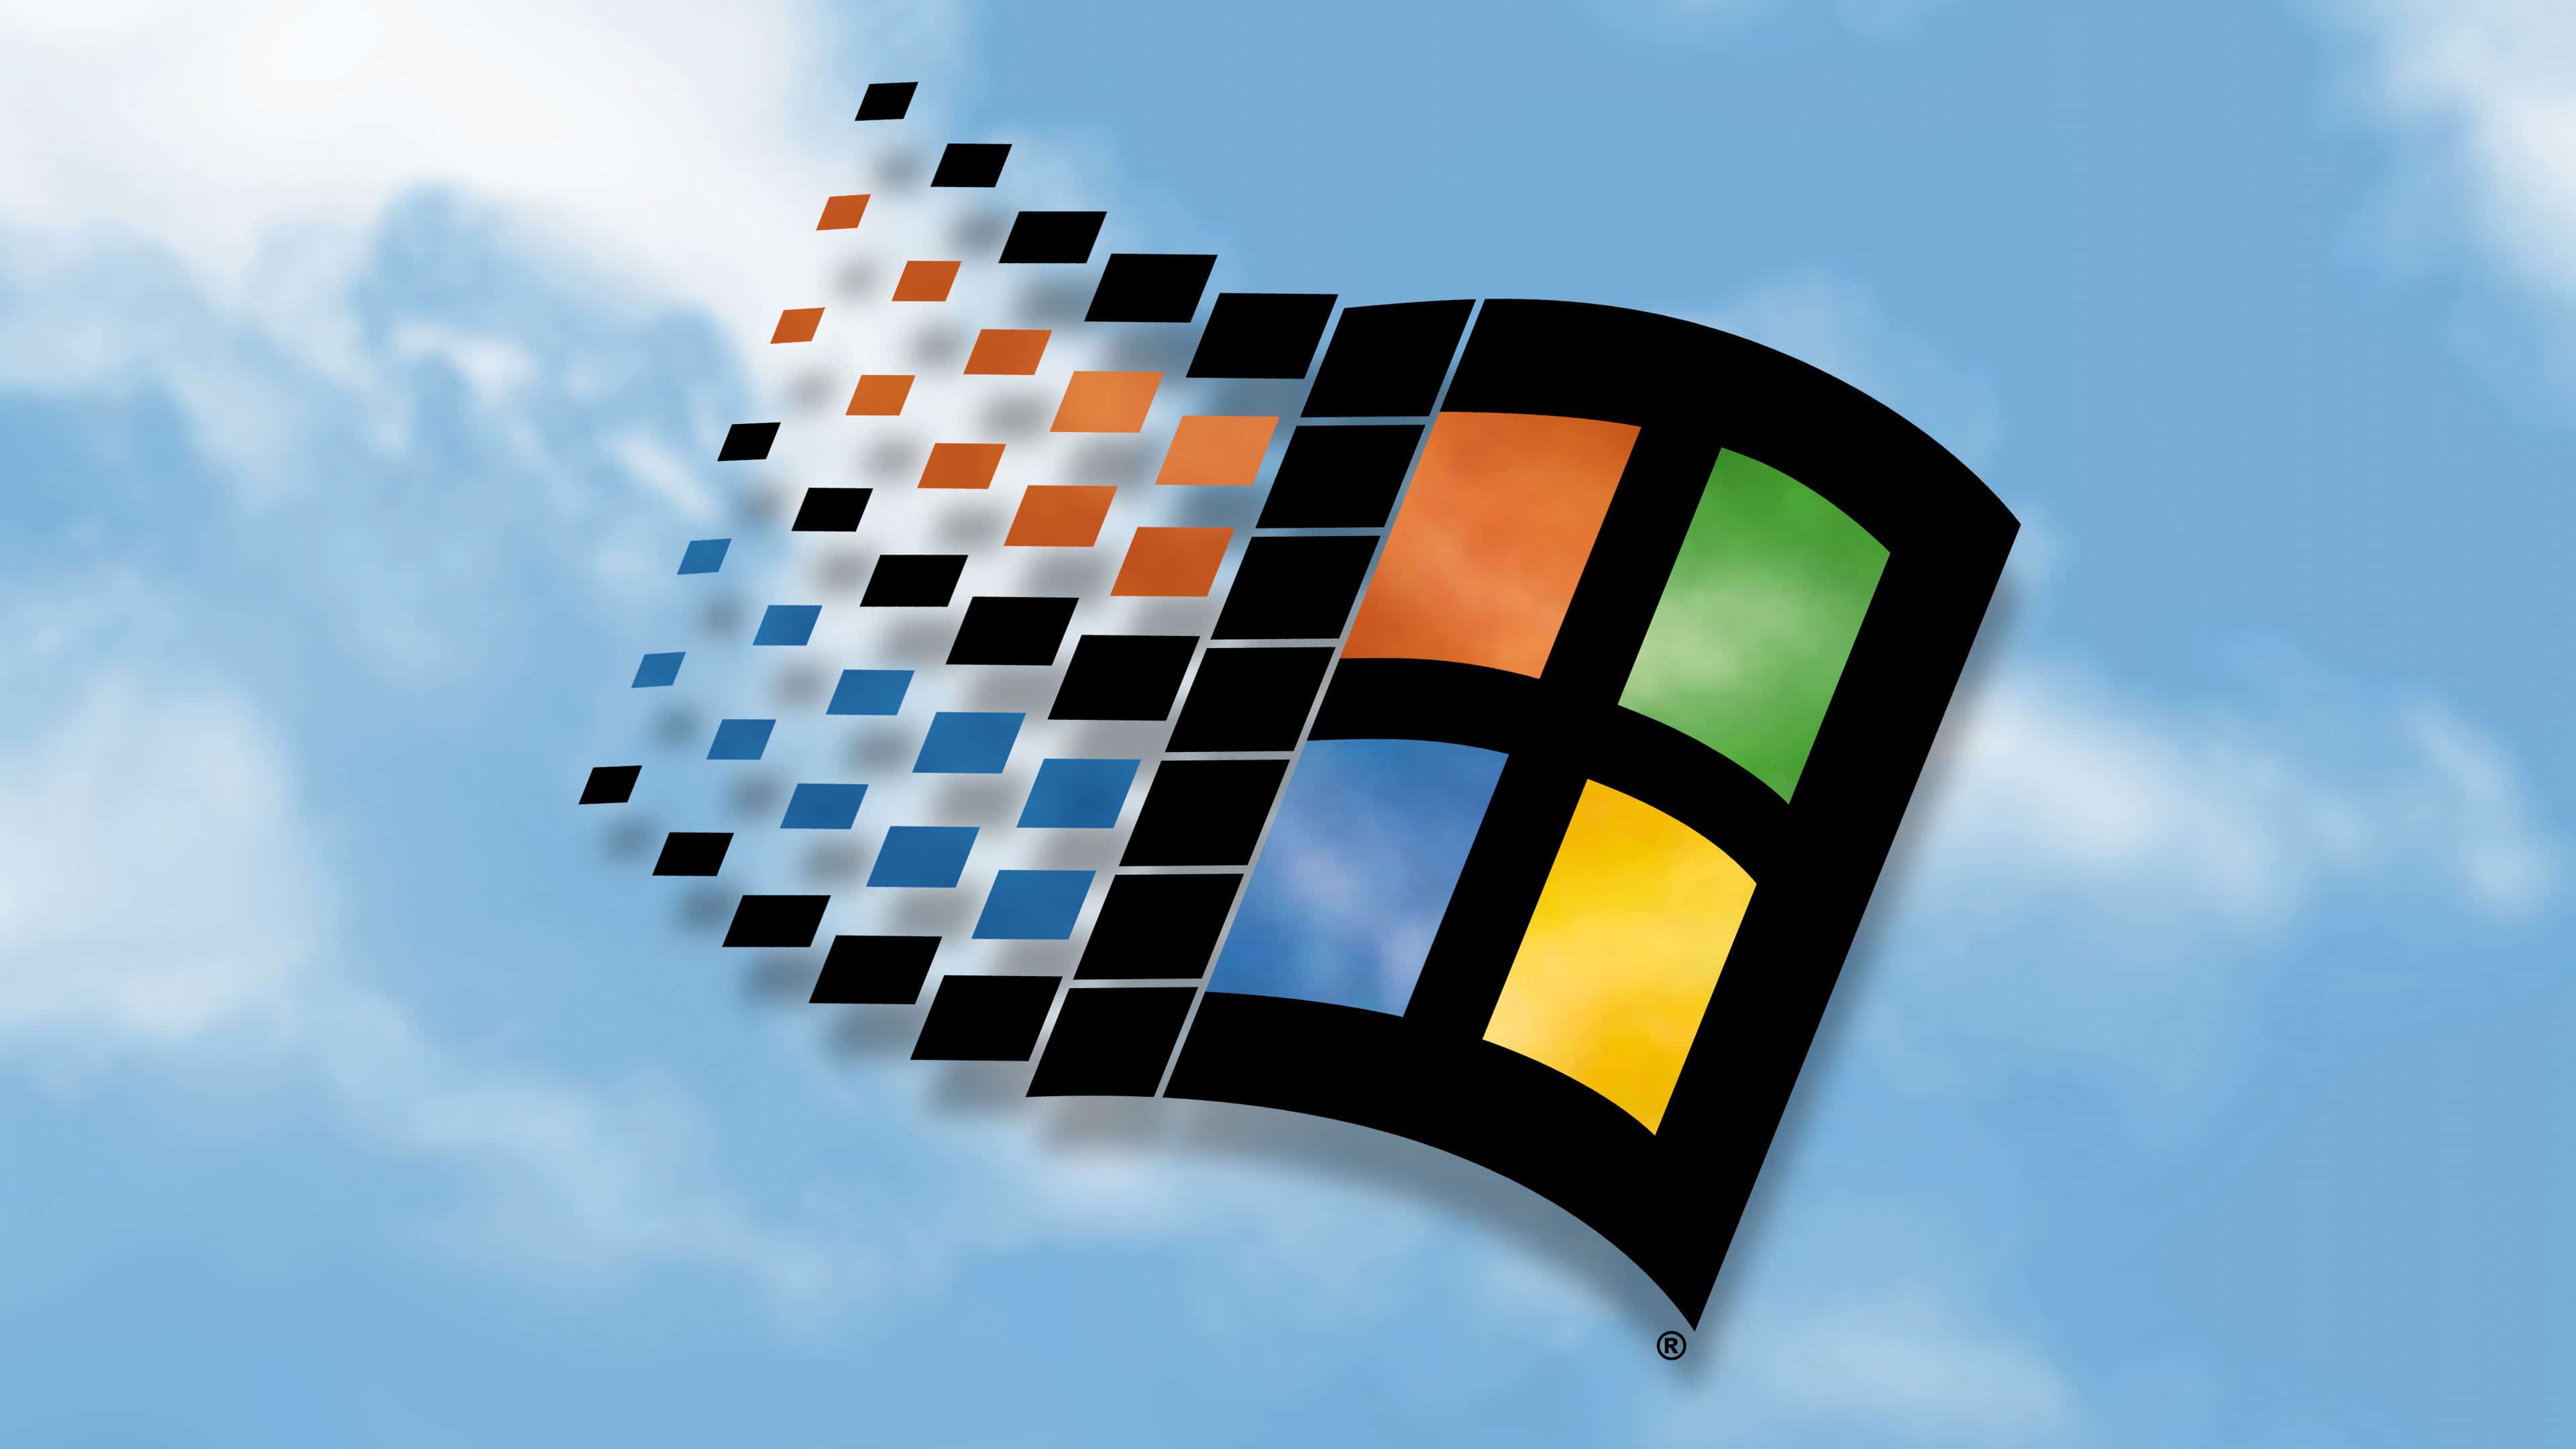 Windows 98 Logo - Windows 98 Logo UHD 4K Wallpaper | Pixelz